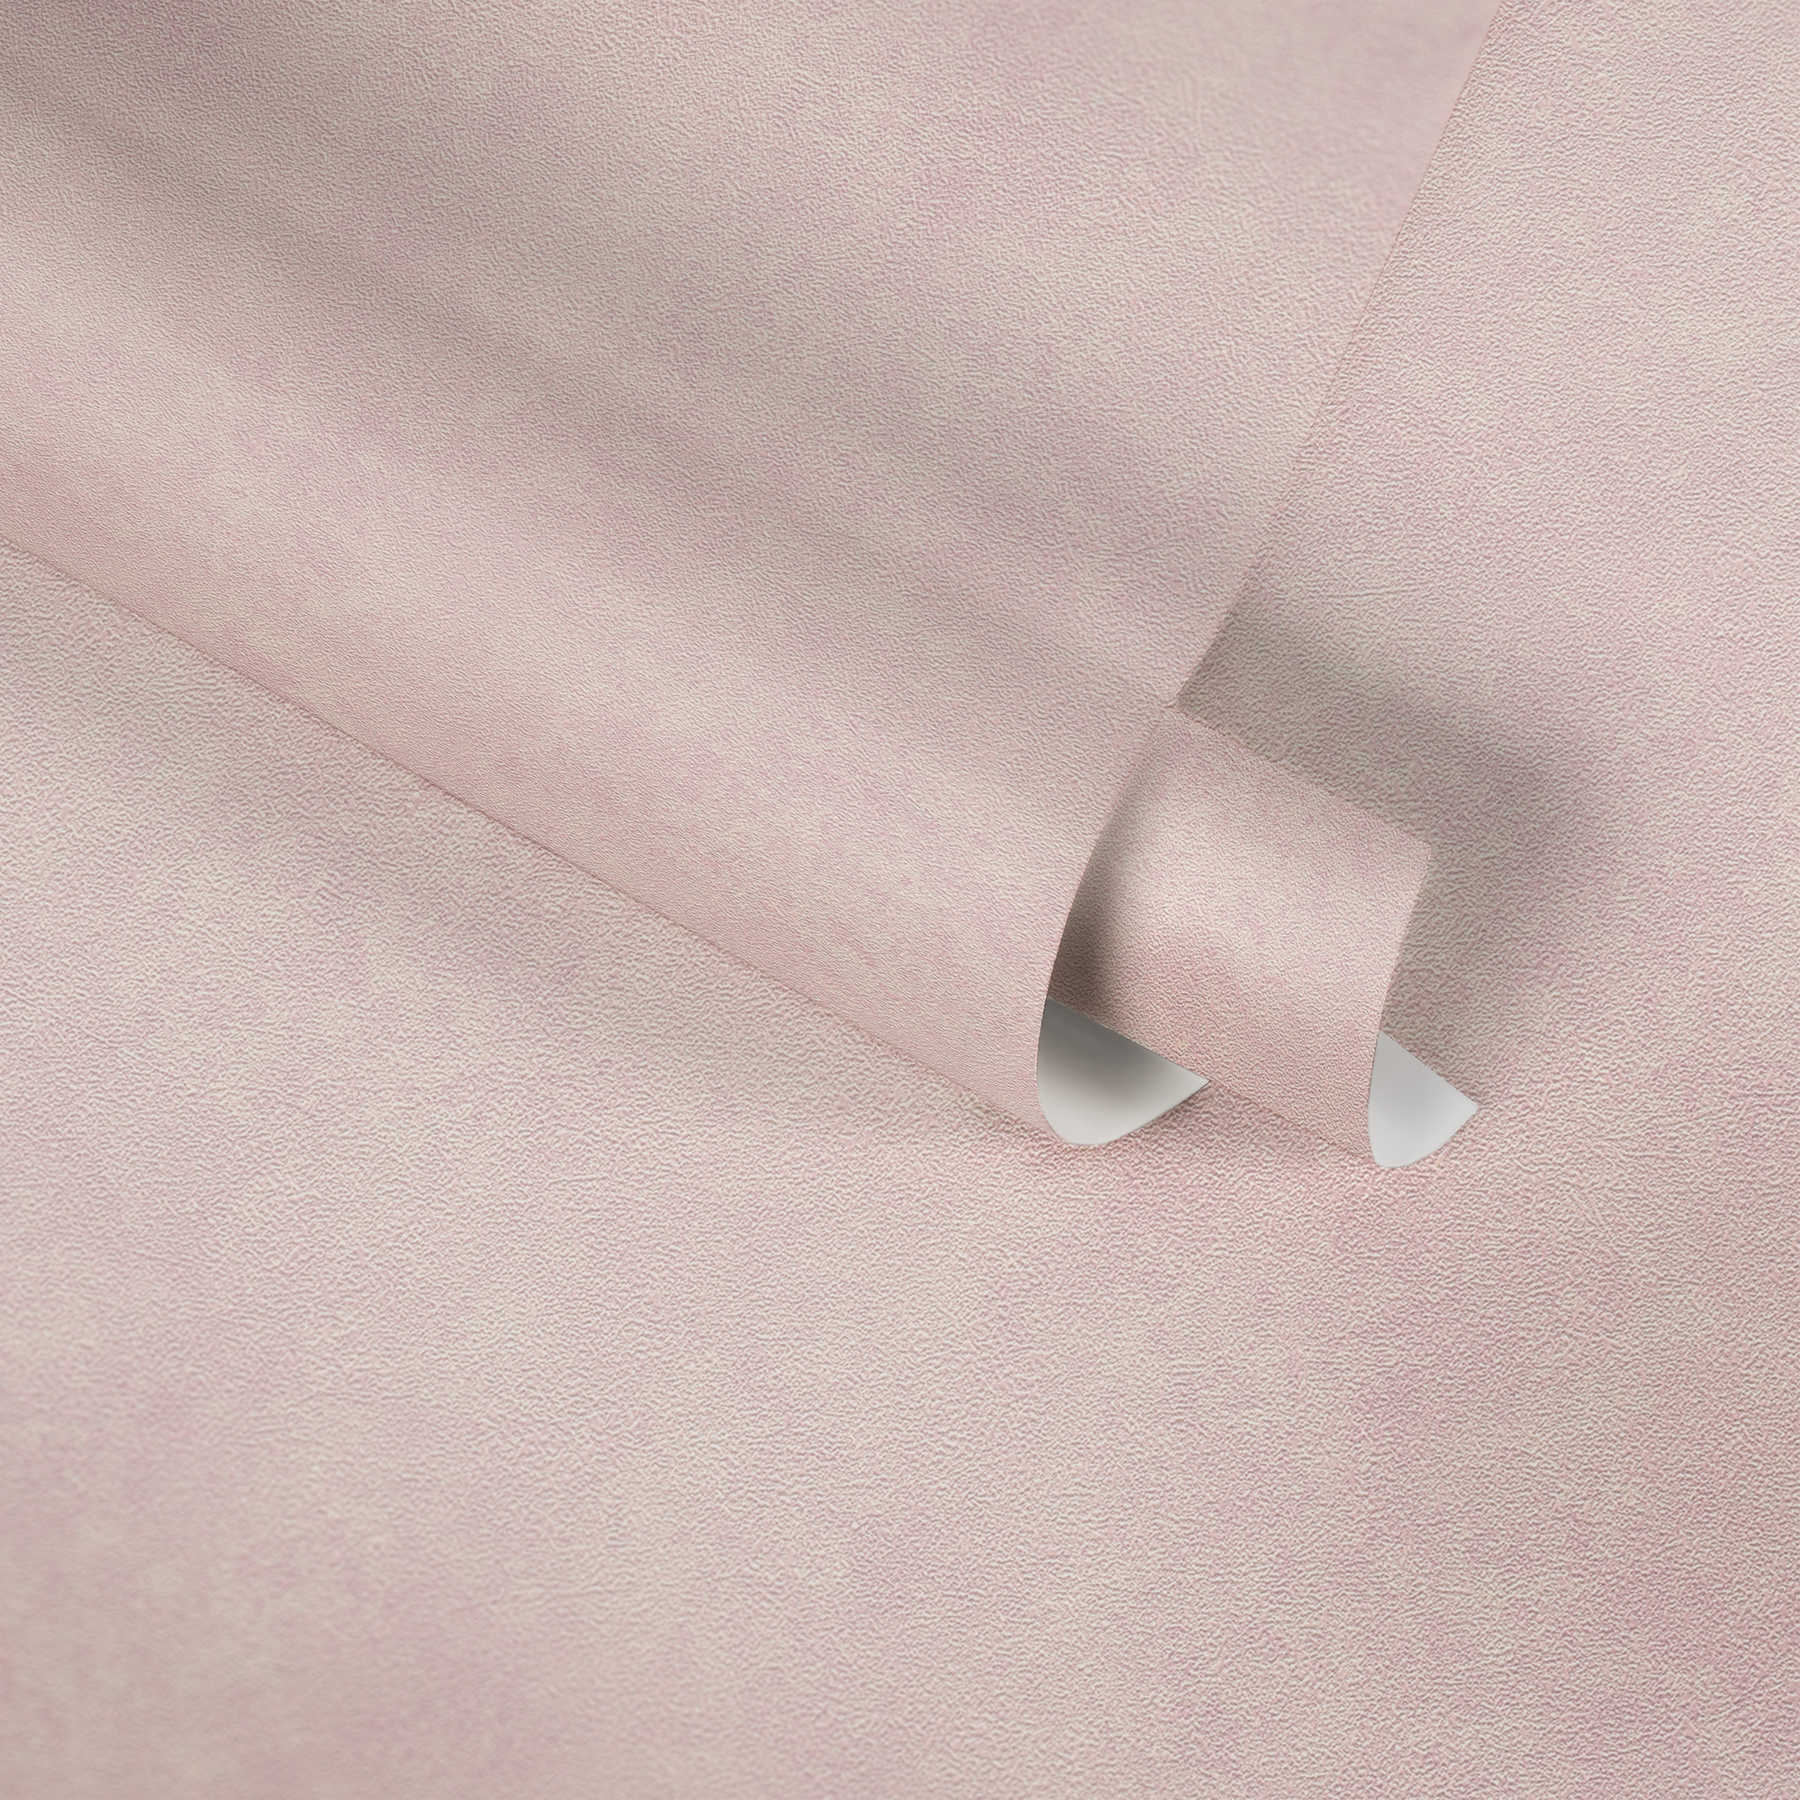             Eenheid Behang Shaded Natural Textured Pattern - Roze
        